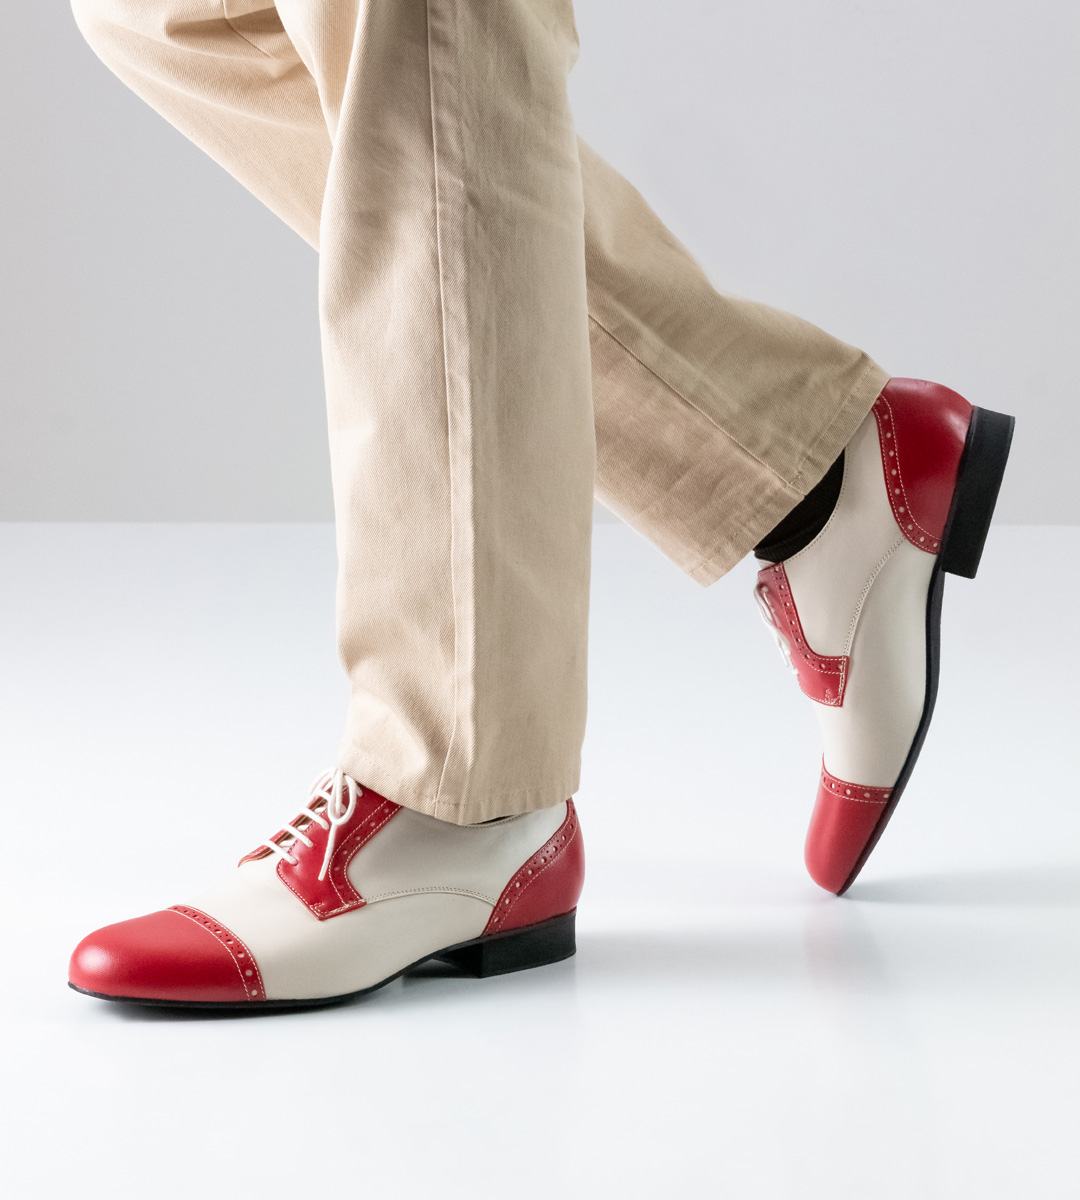 red-beige men's dance shoe by Werner Kern with a heel height of 2 cm